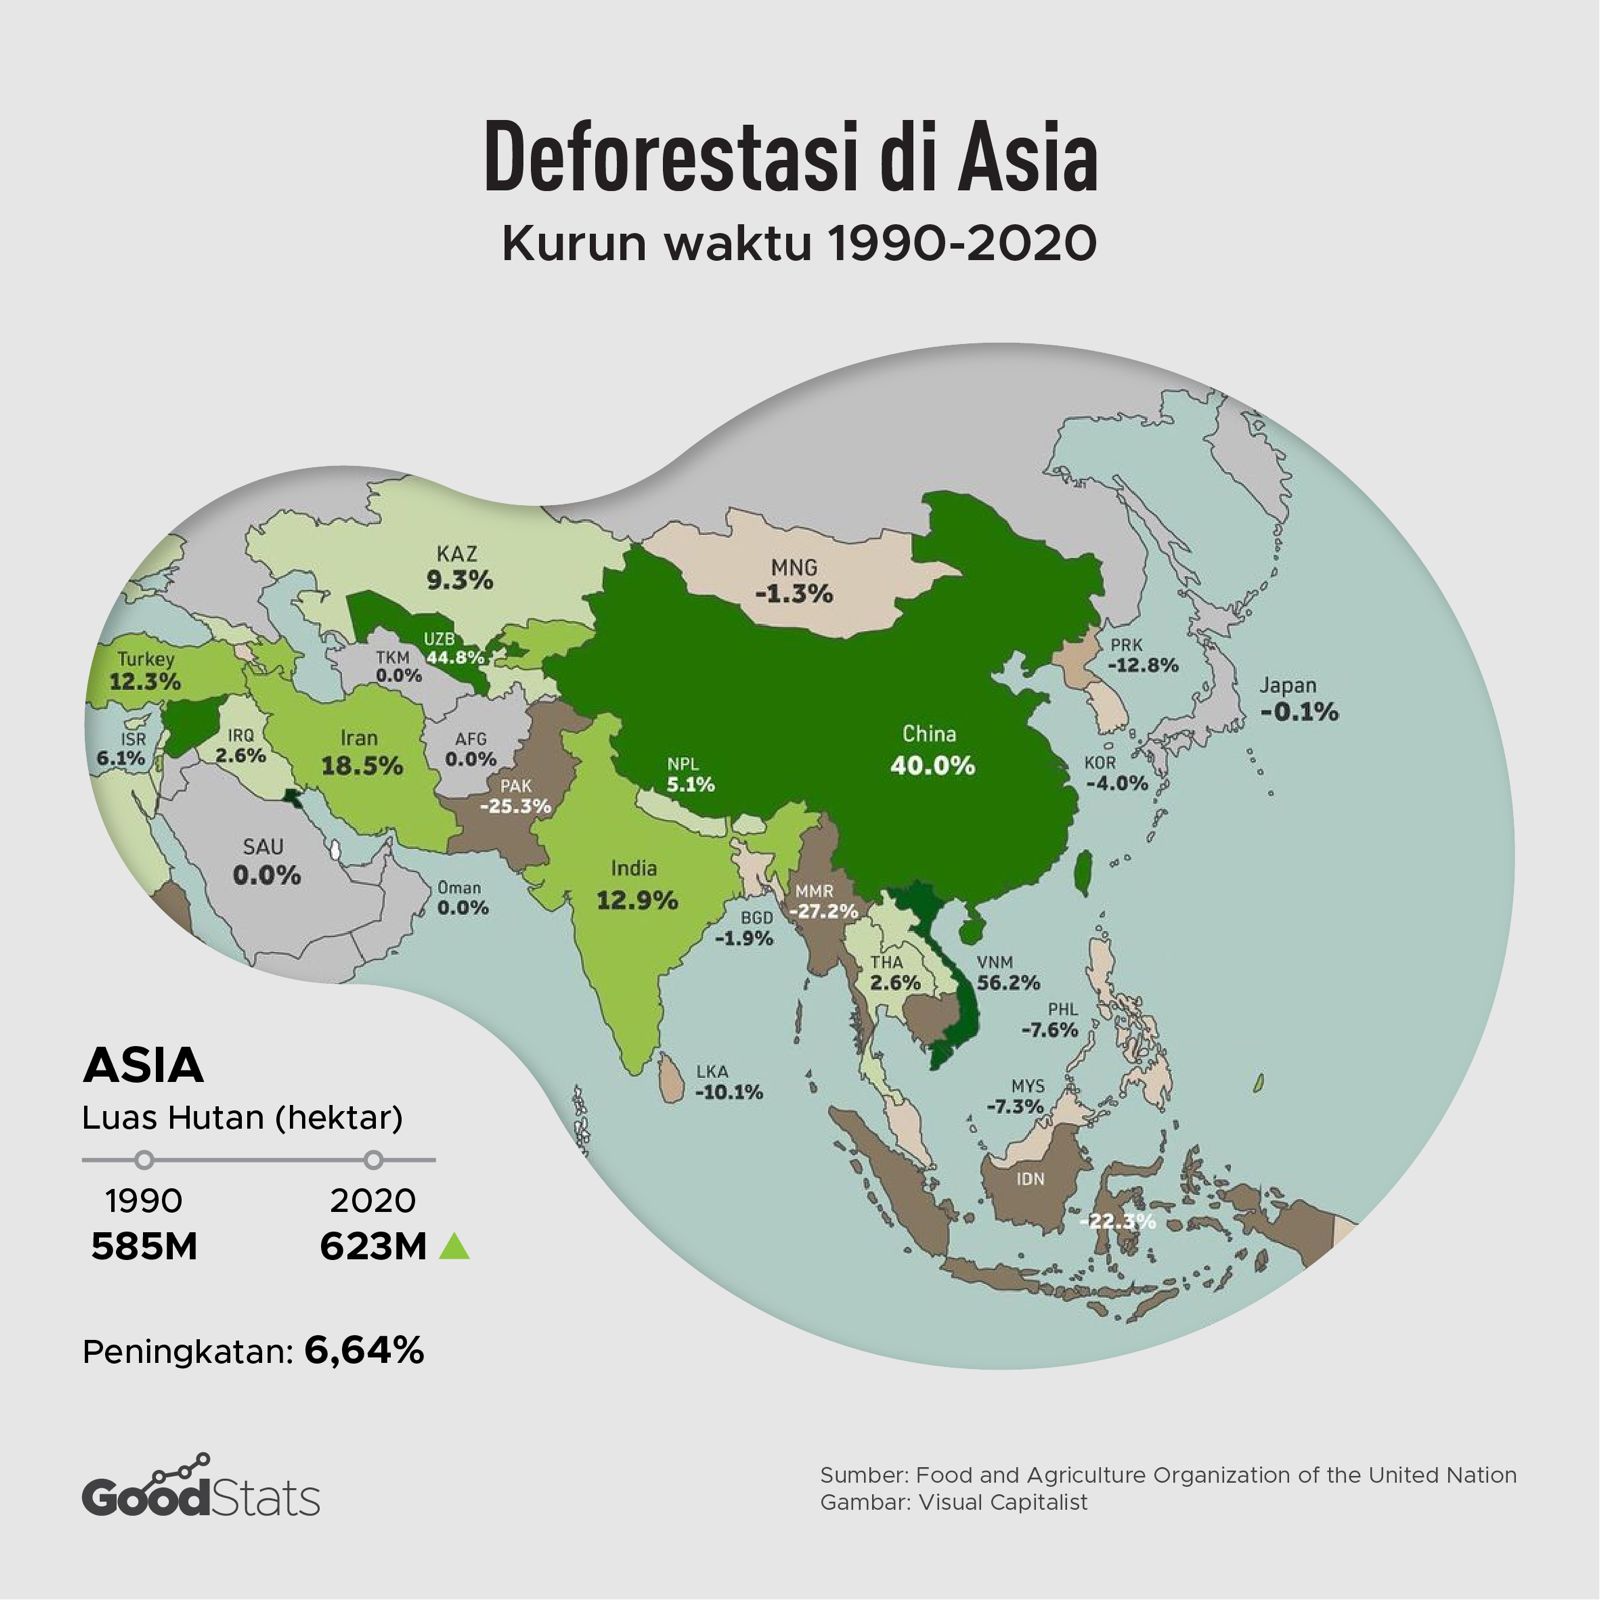 Deforestasi di Asia | Aghapier/GoodStats